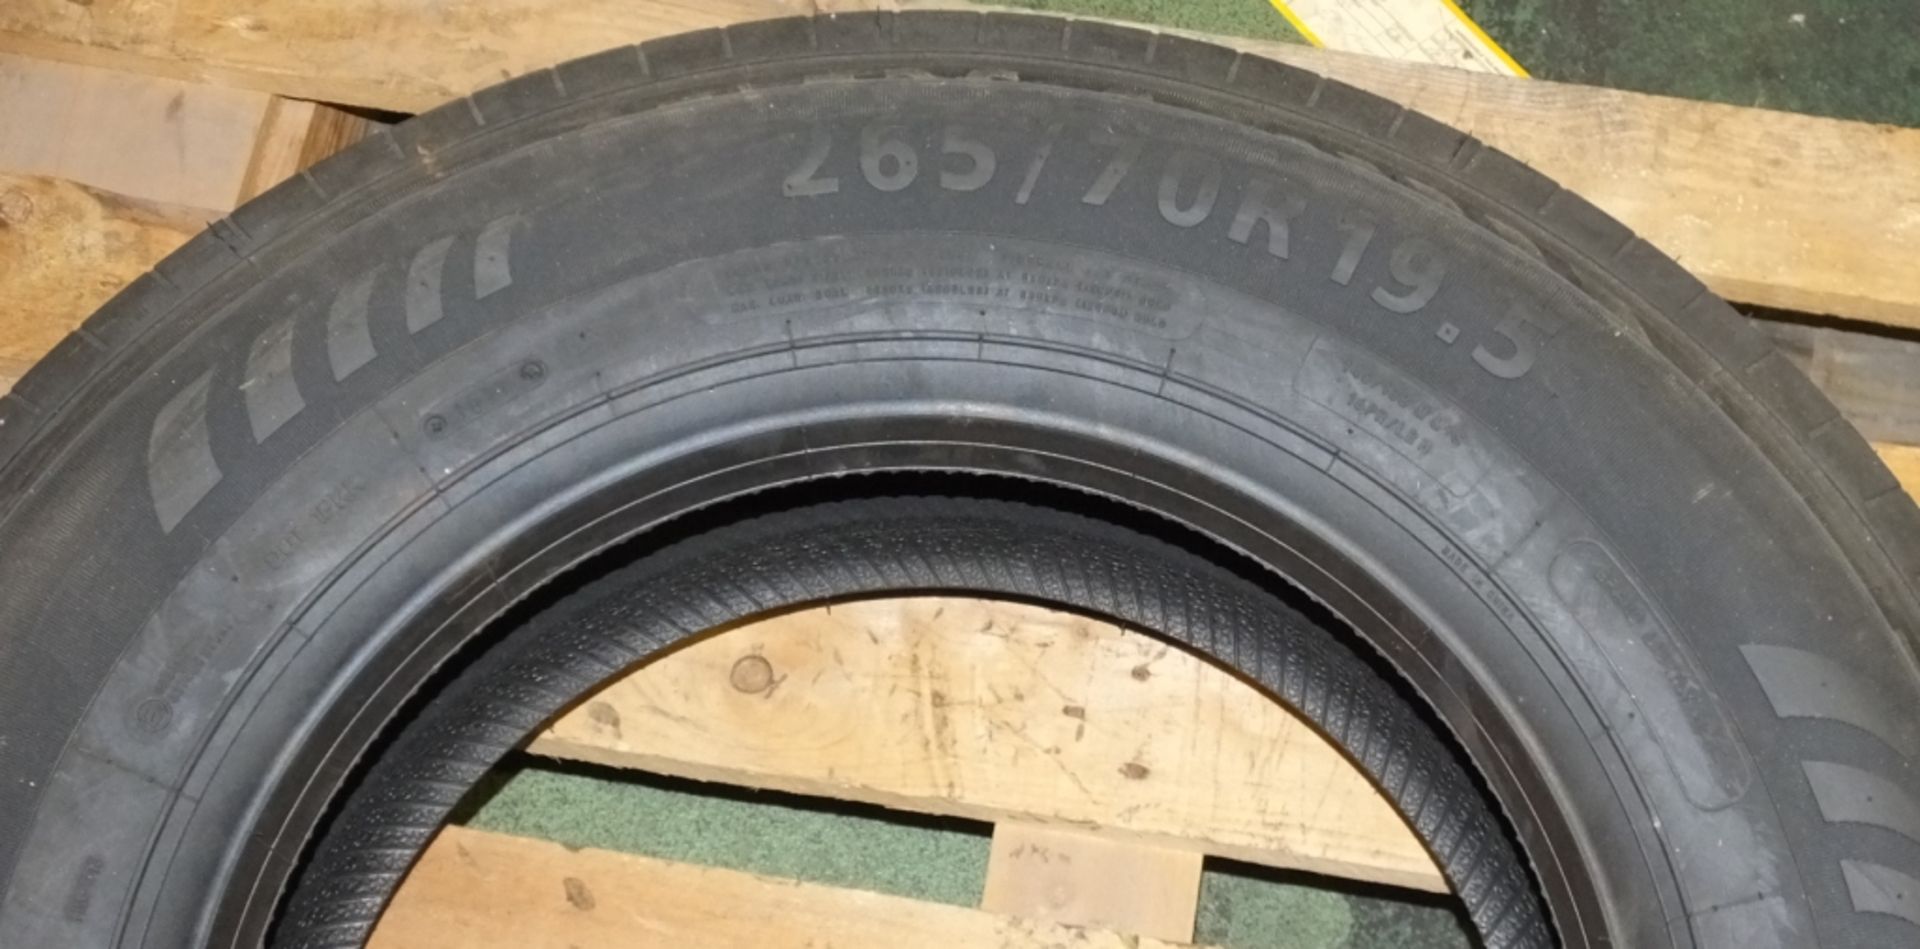 Alplus 265 / 70R 19.5 S201 tyre (new & unused) - Image 5 of 7